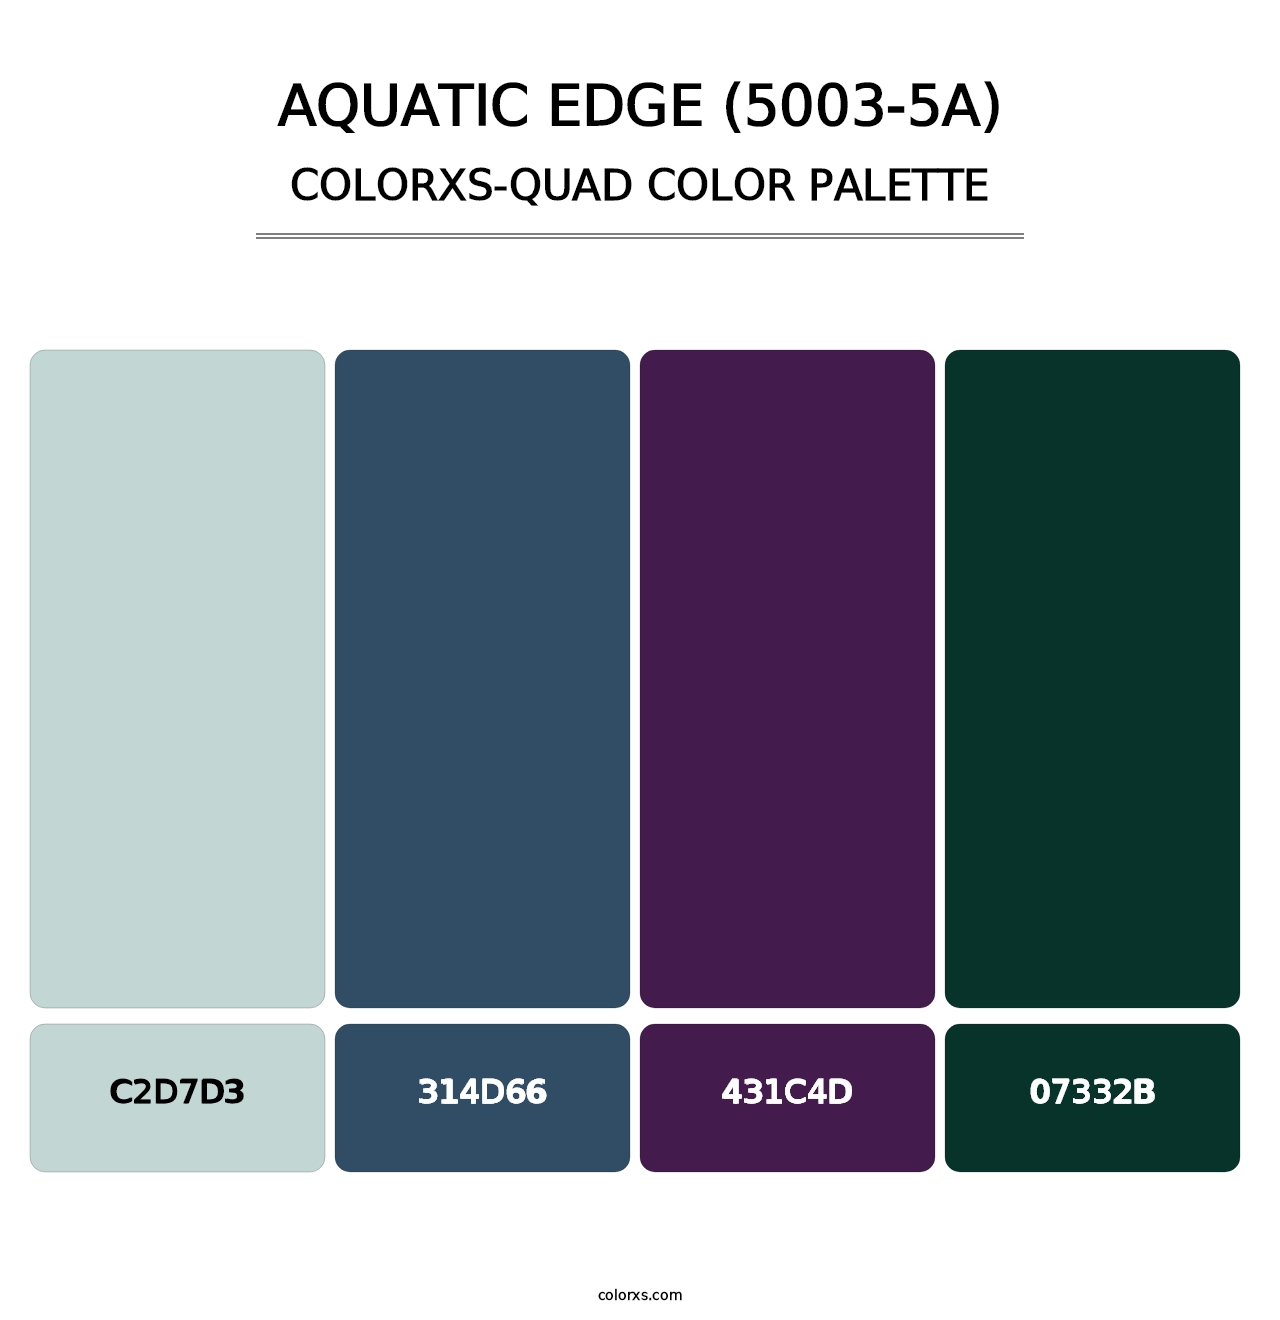 Aquatic Edge (5003-5A) - Colorxs Quad Palette